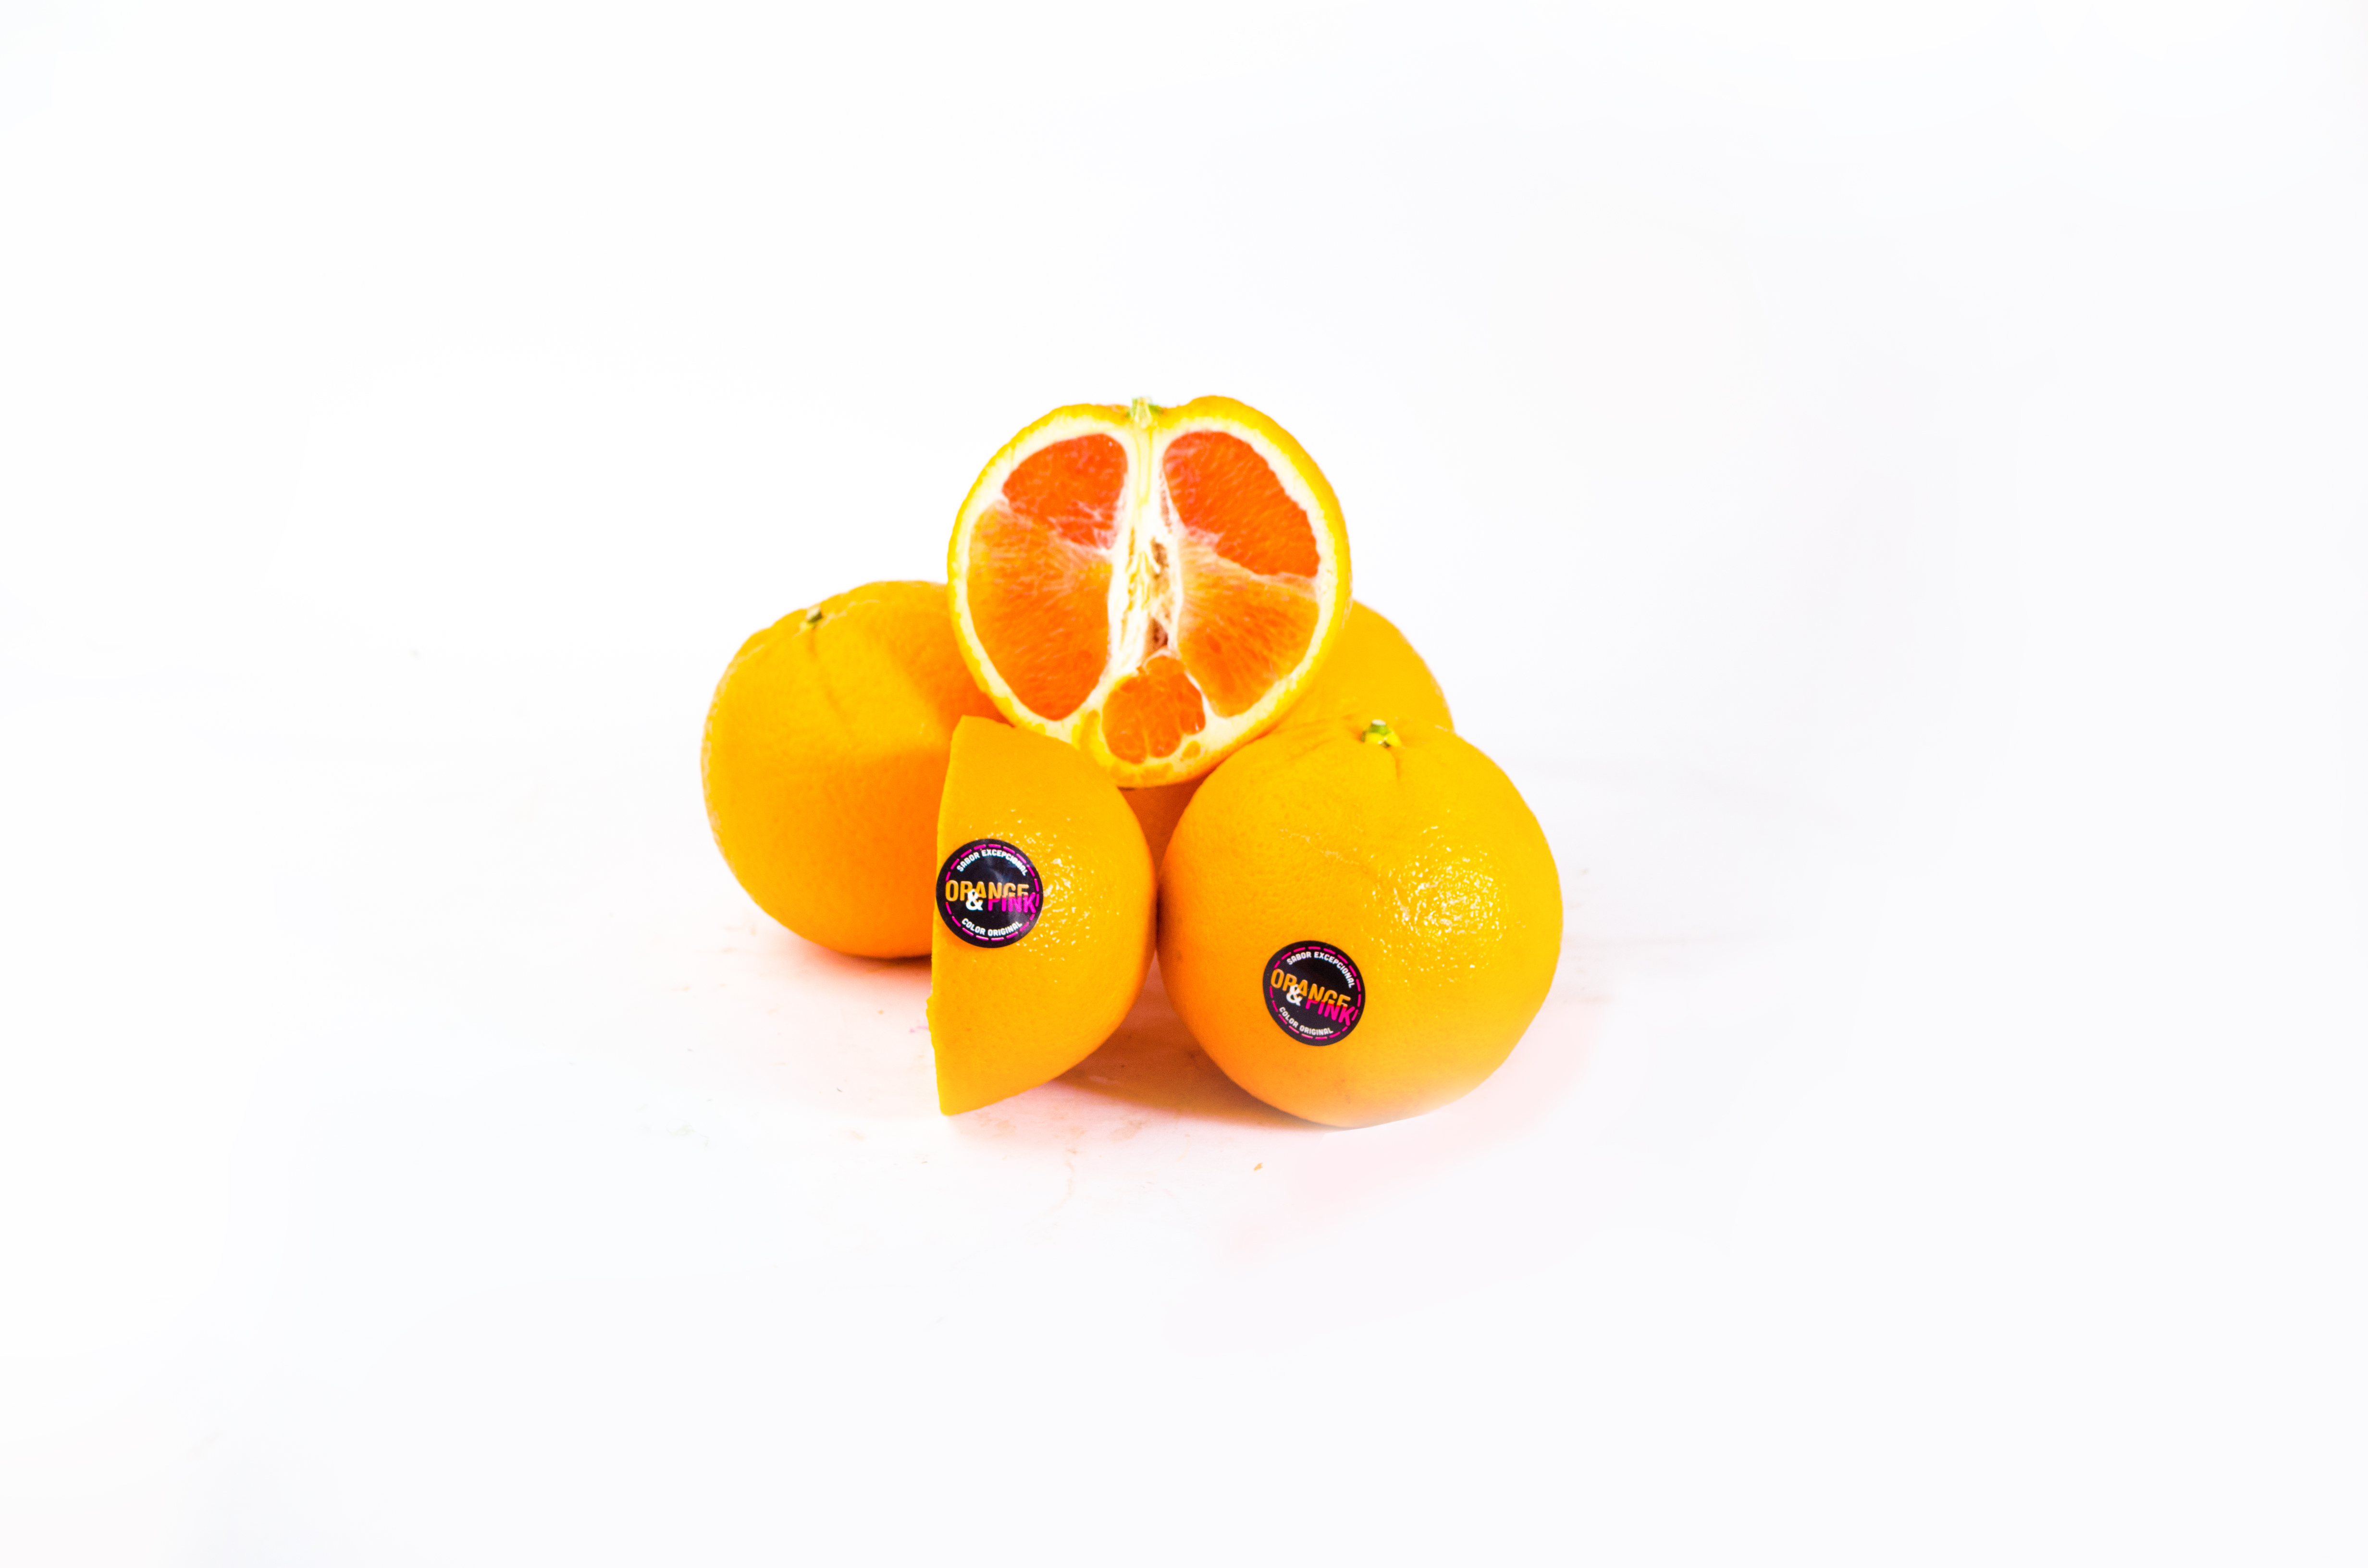 Orangen Caracara La Comba Kiste